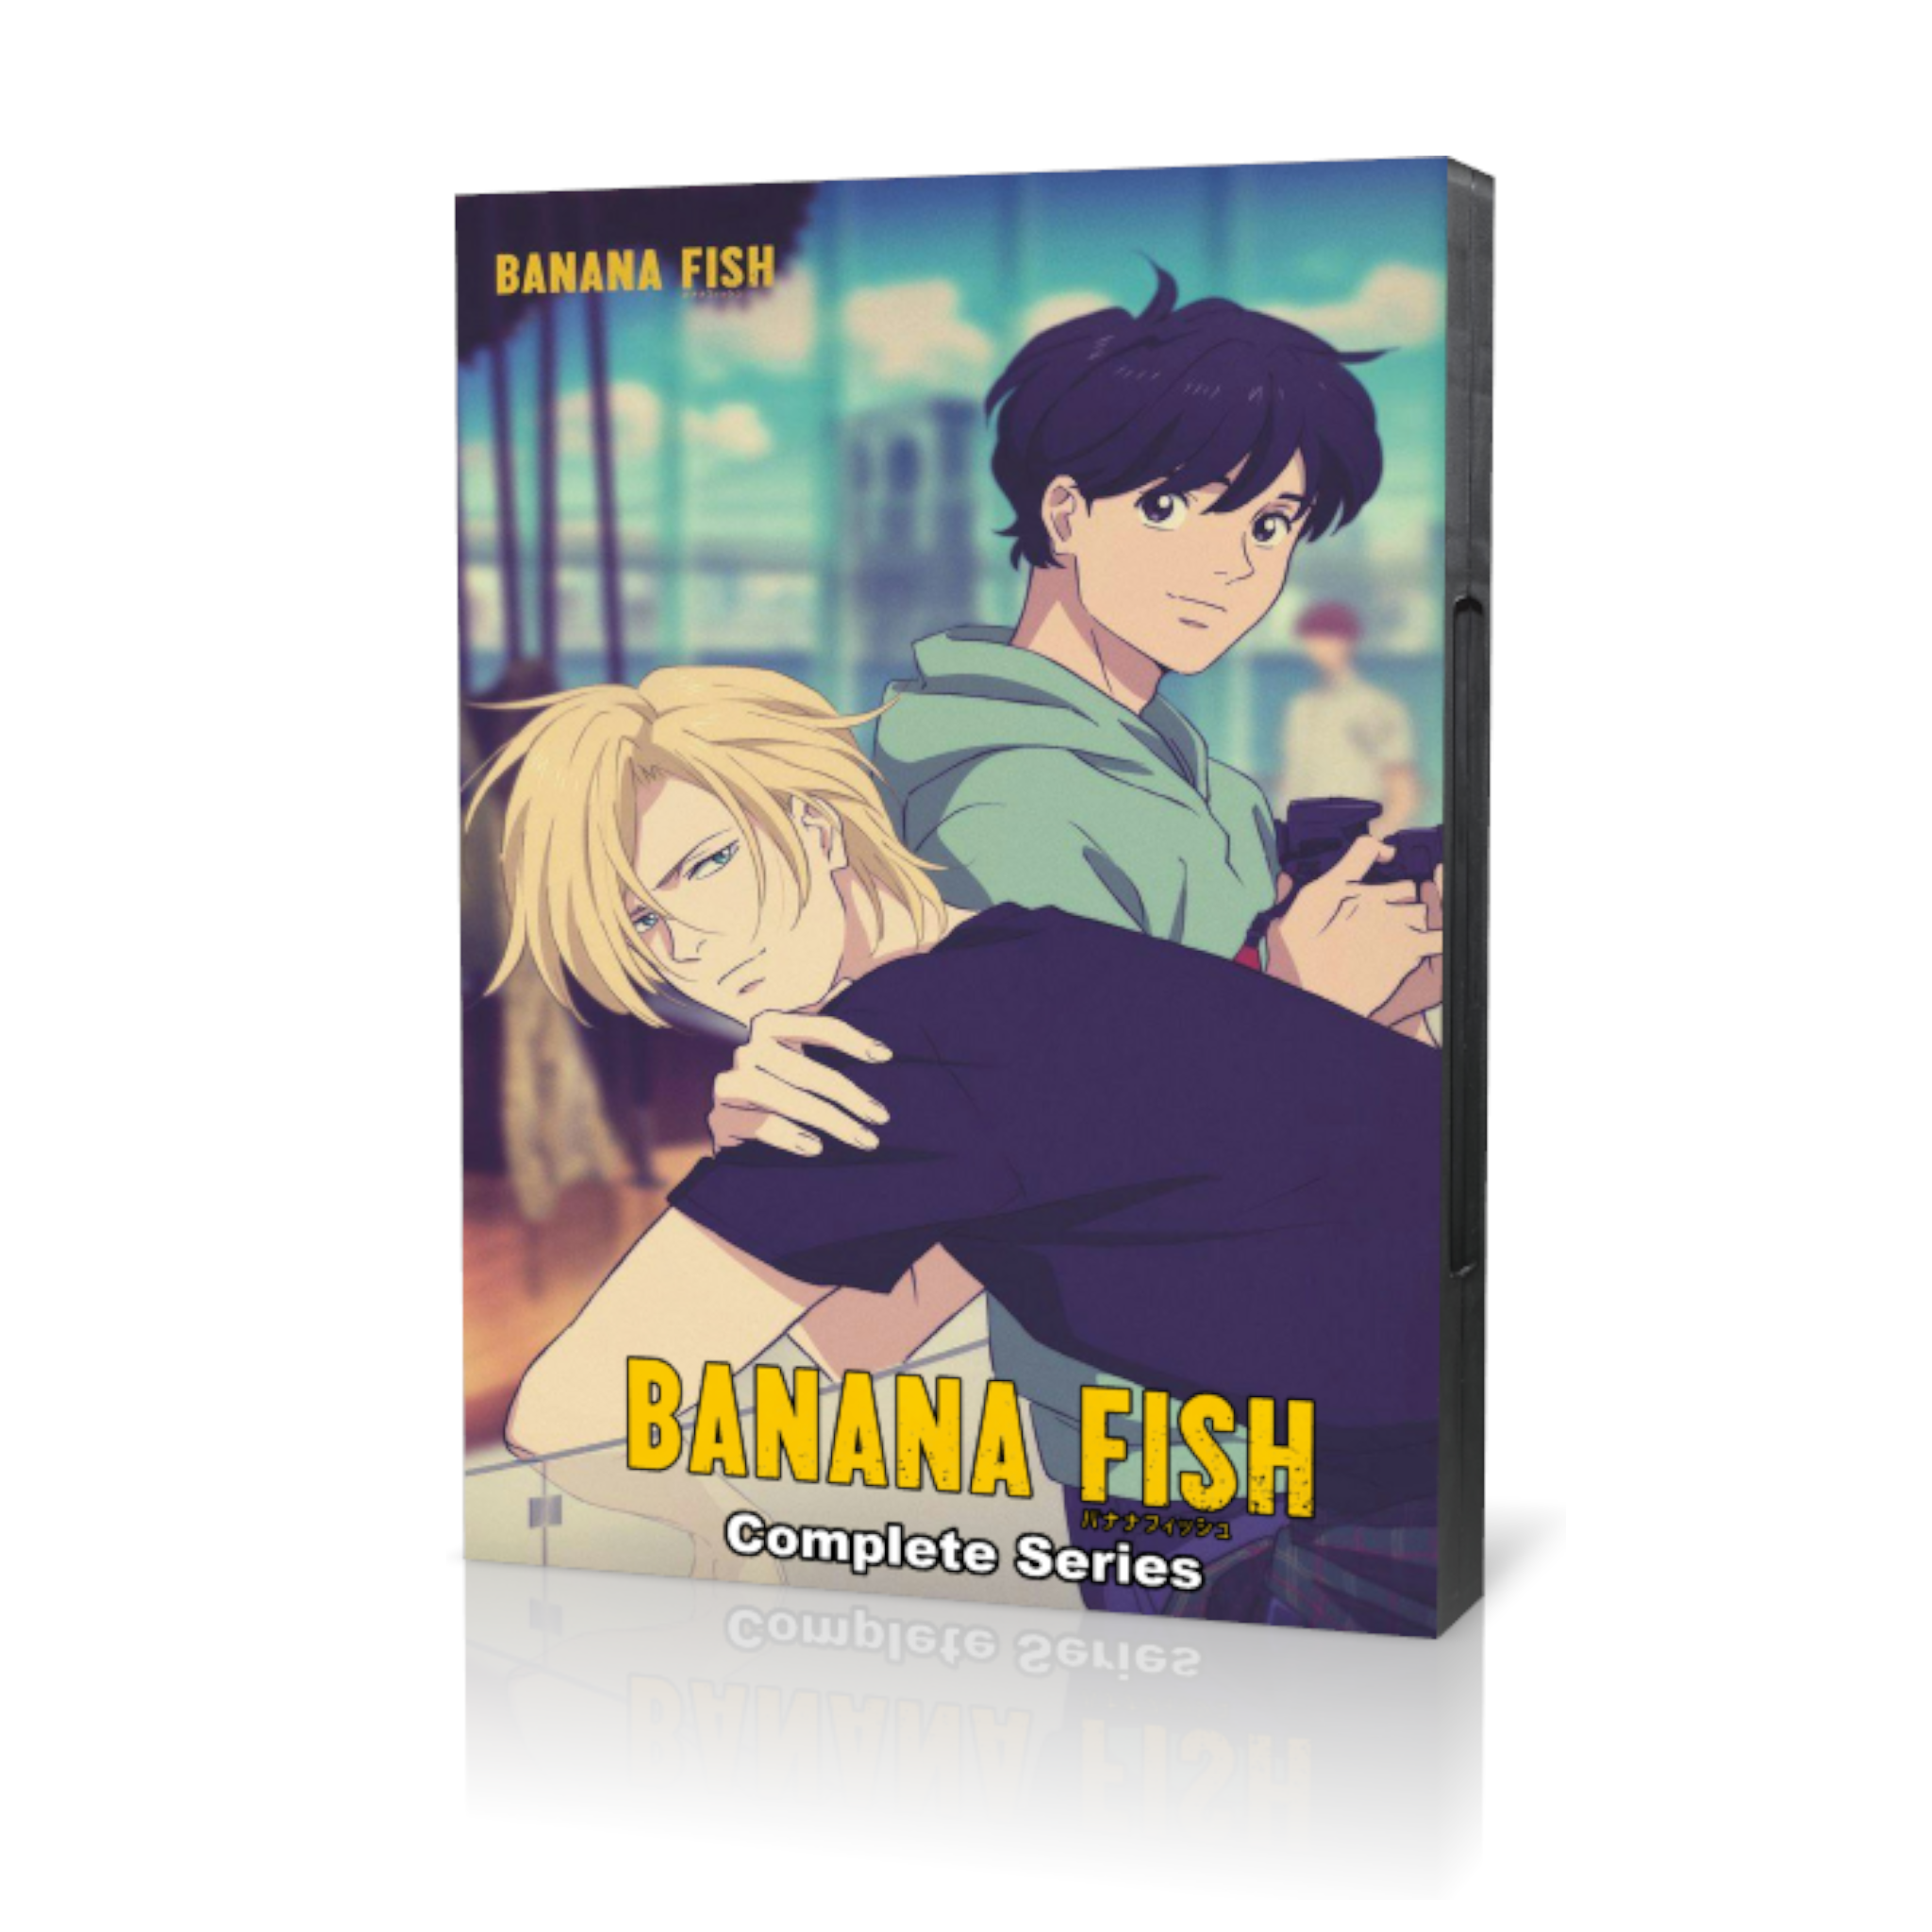 Banana Fish Complete Series (1-24) Anime DVD [English Sub] [Fast Ship]